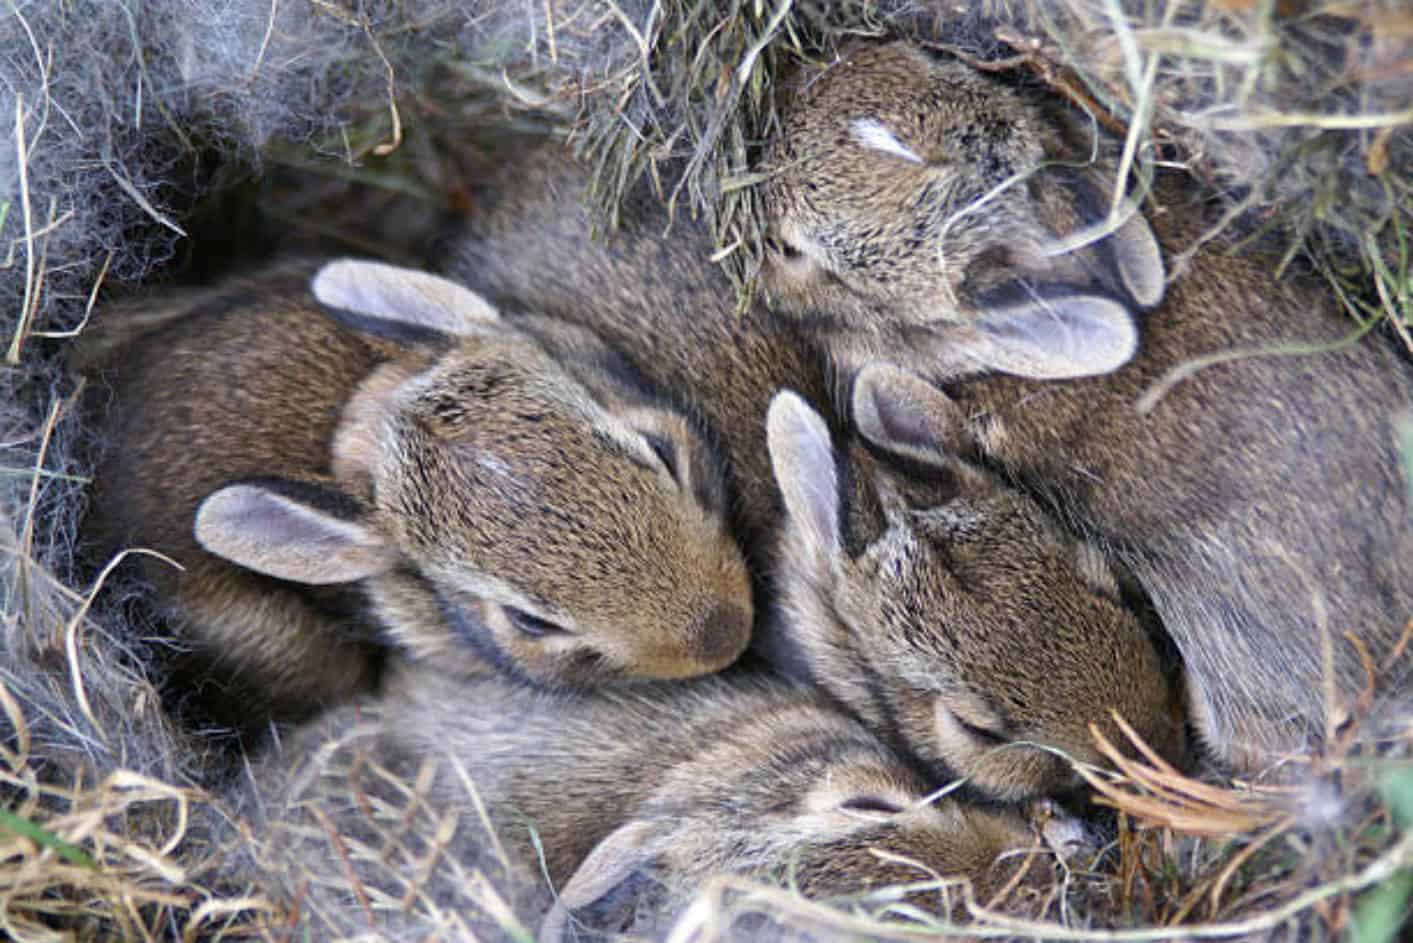 where do wild rabbits sleep